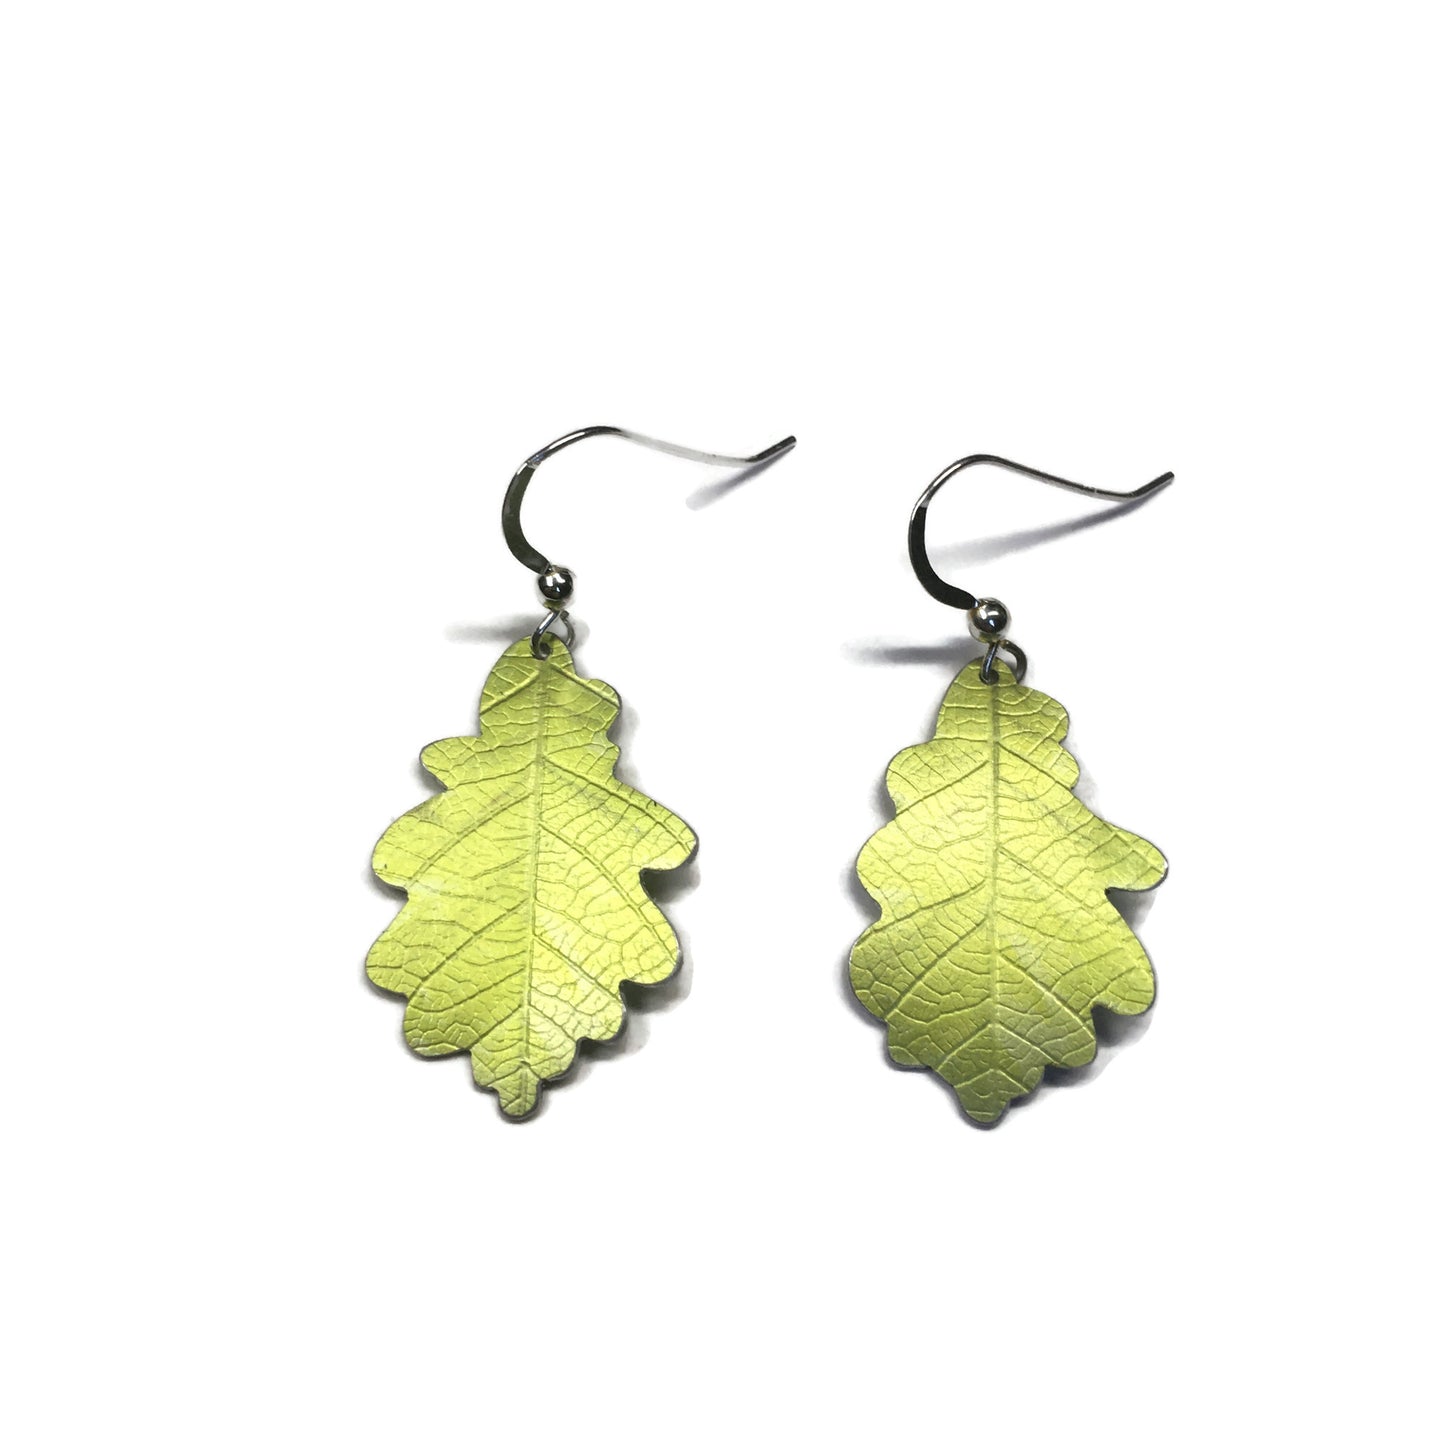 Spring green Oak leaf earrings by Photofinish Jewellery